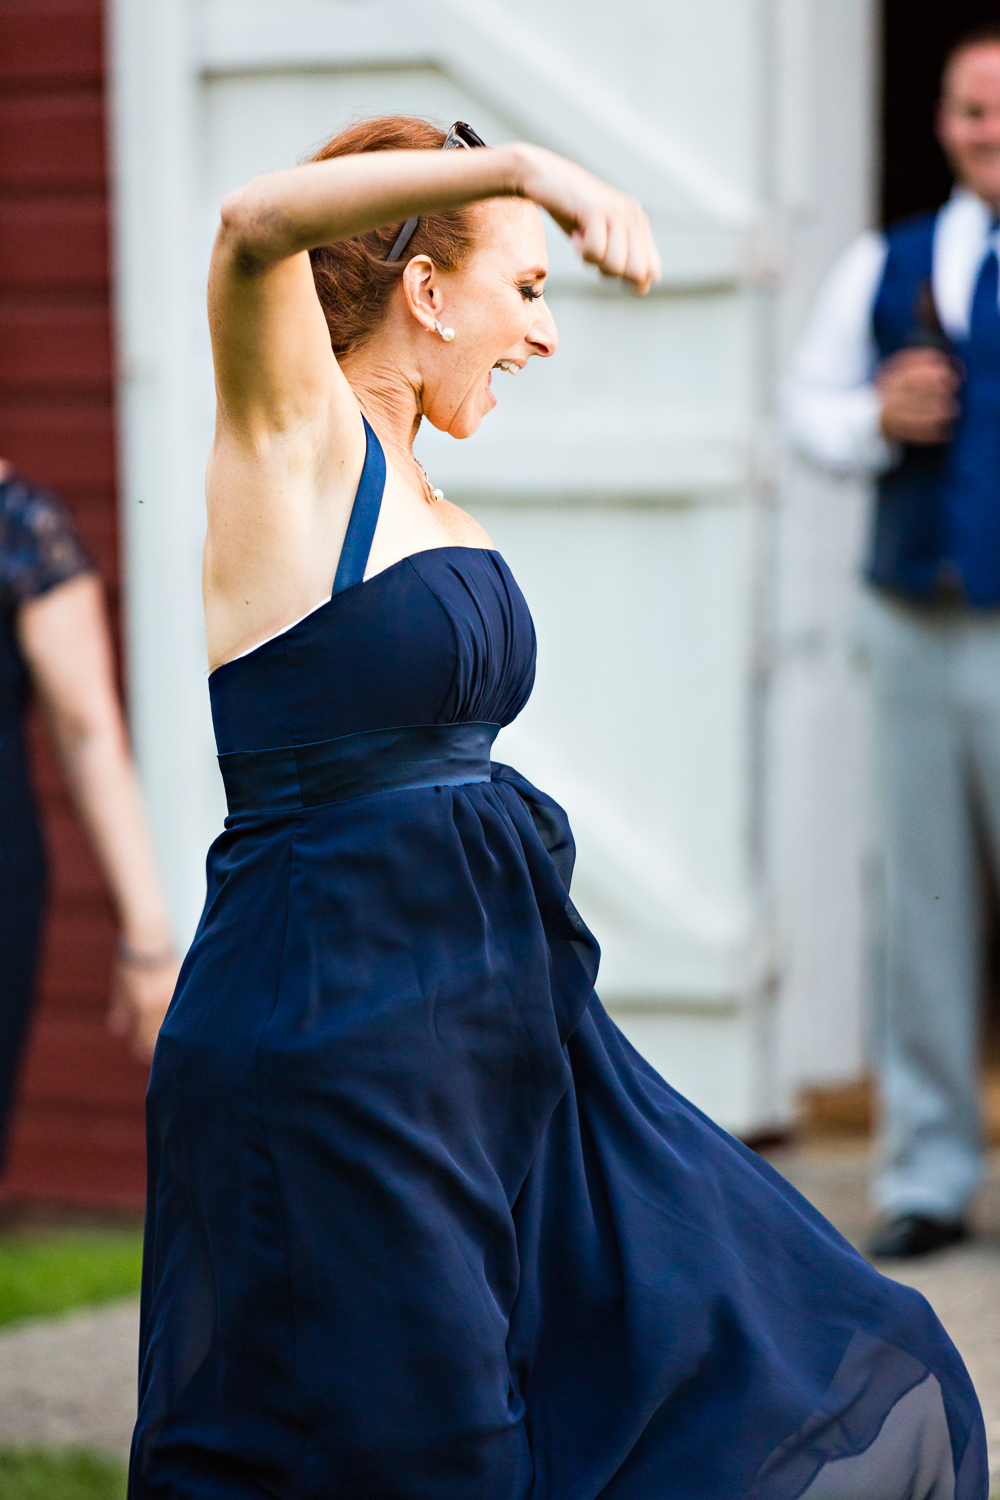 bozeman-montana-wedding-roys-barn-bridesmaid-dancing.jpg